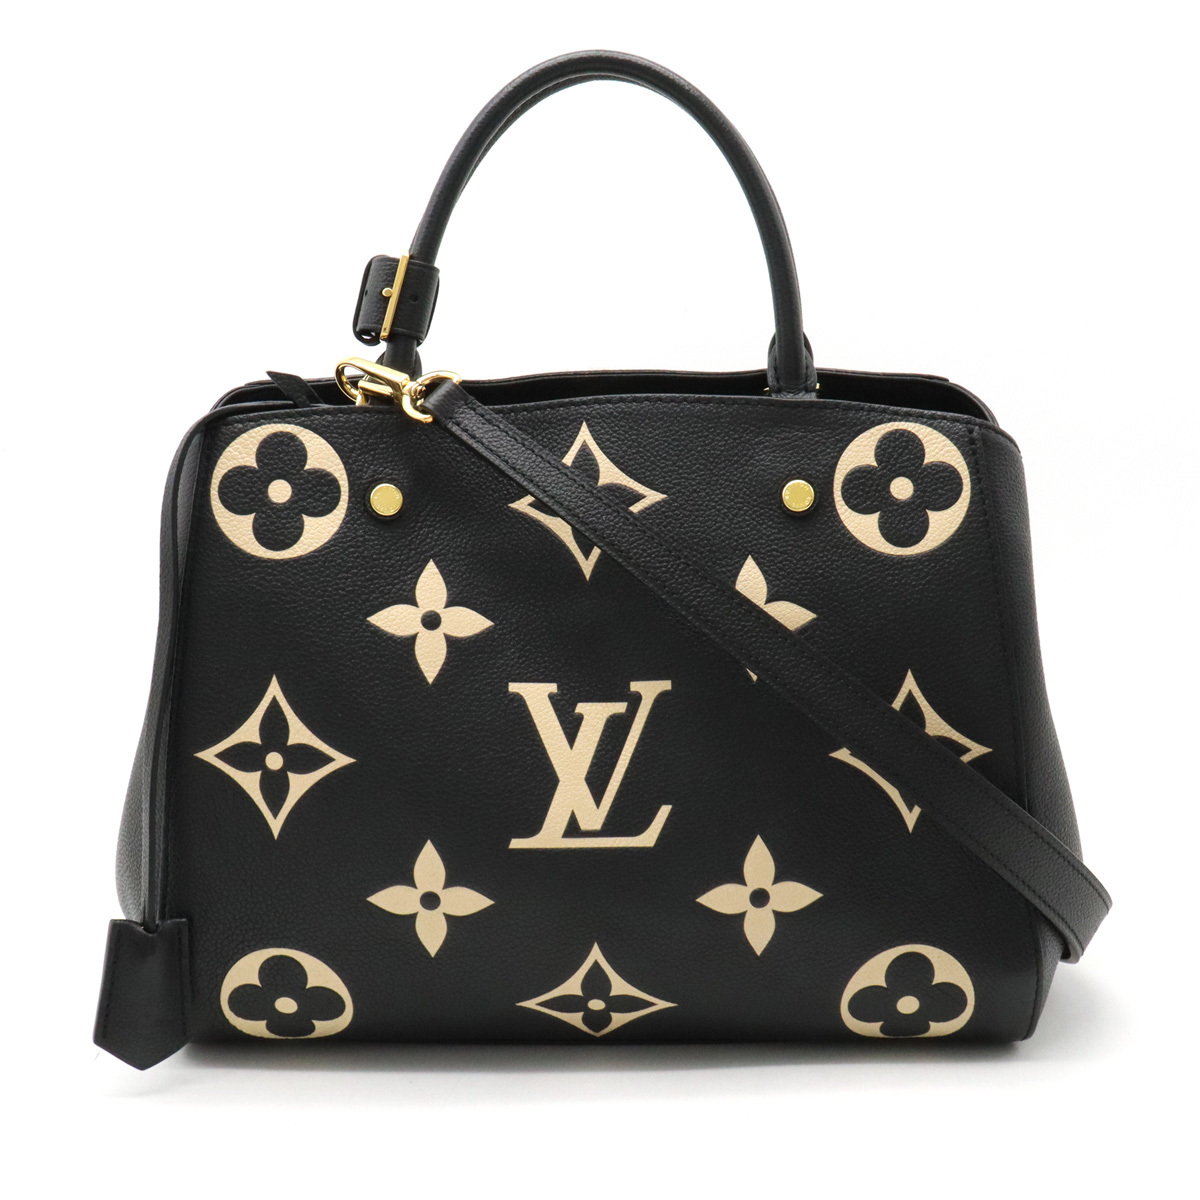 LOUIS VUITTON Louis Vuitton bai цвет монограмма Anne план to monte -nyuMM ручная сумочка 2WAY